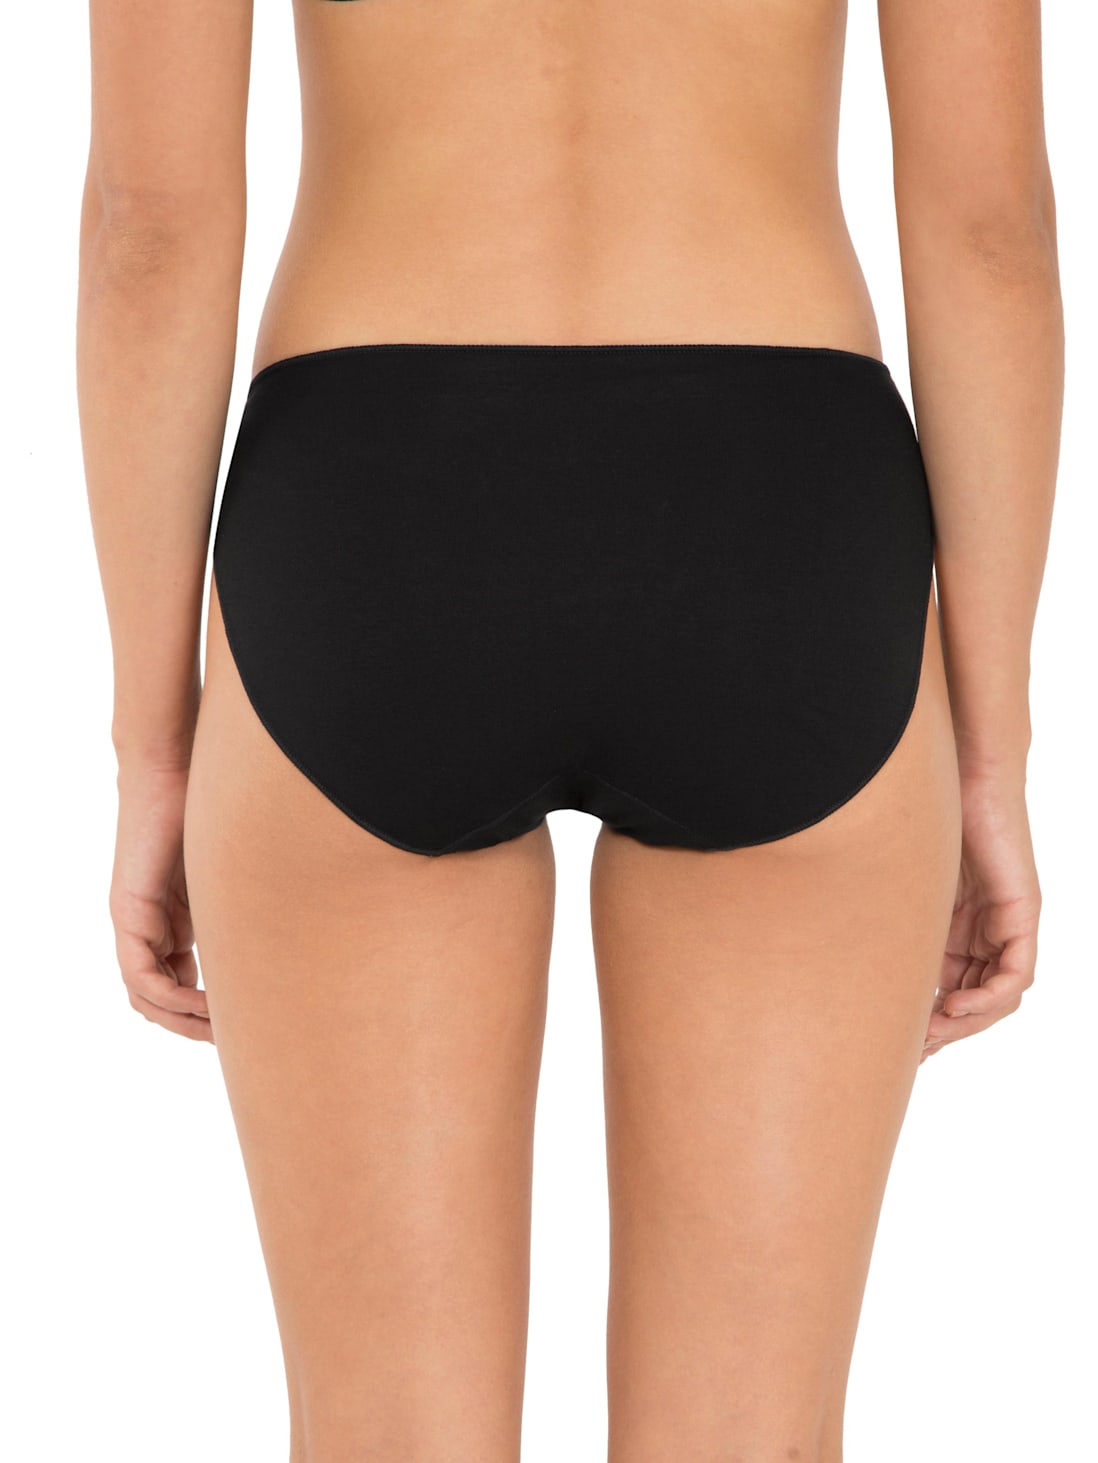 Buy Jockey Black Bikini - 1803 for Women Online @ Tata CLiQ